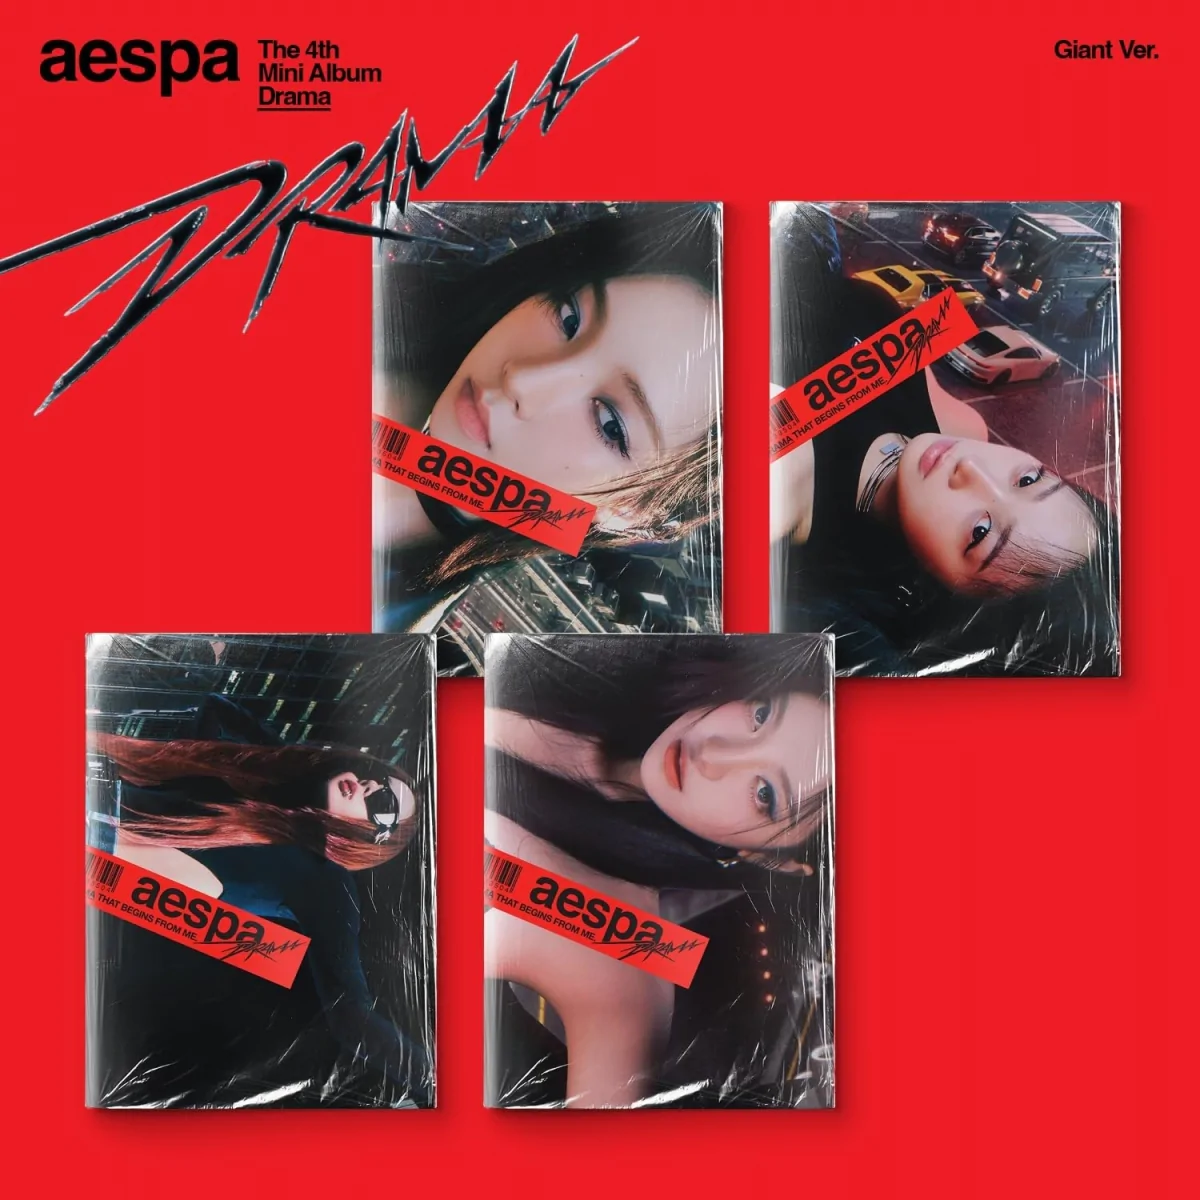 aespa - Drama (Giant Winter Version) (4th Mini Album) 